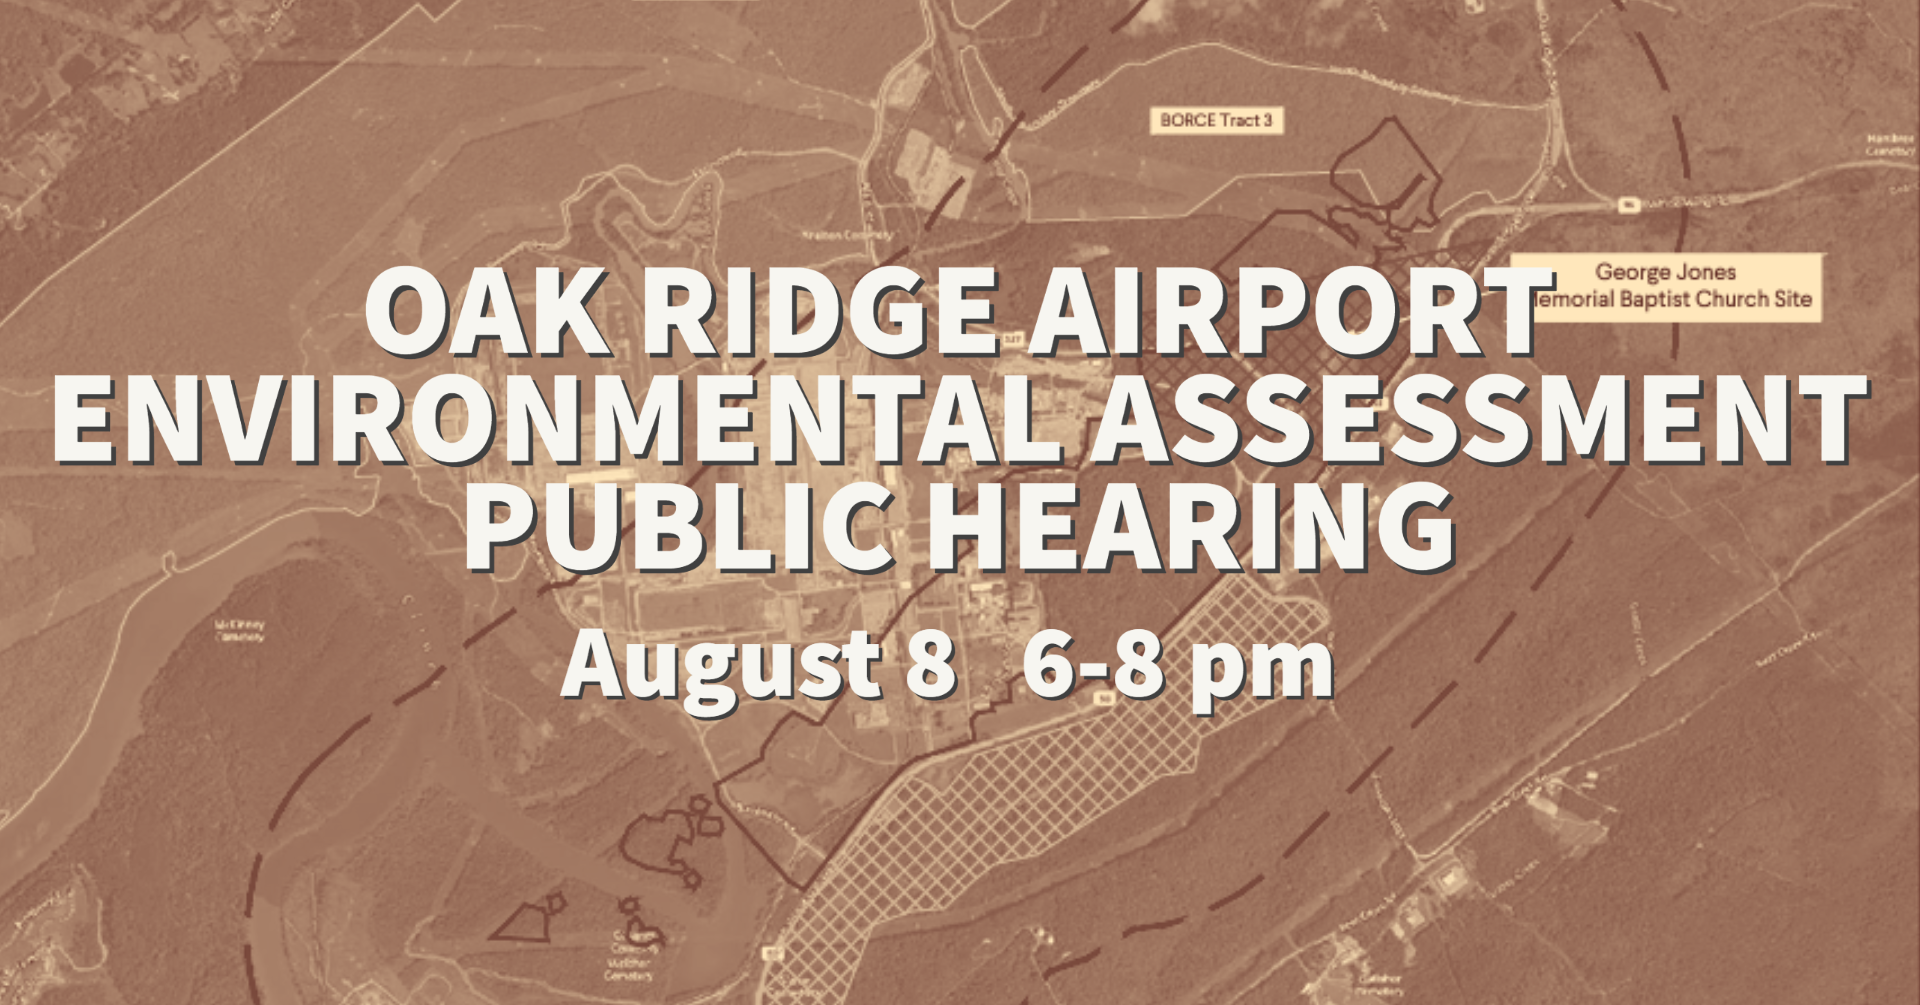 Oak Ridge Airport Environmental Assessment Public Hearing August 8 from 6-8 PM